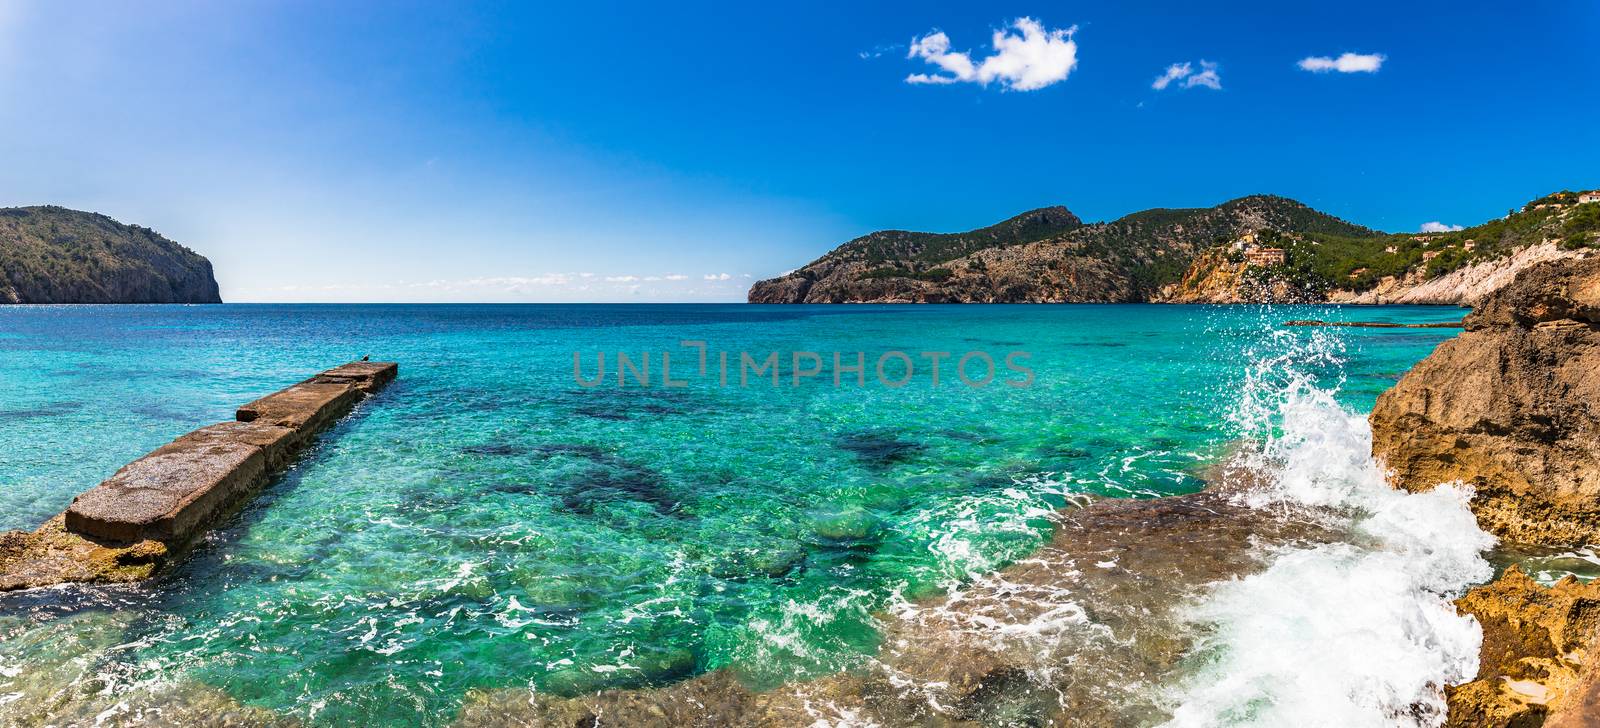 Beautiful sea scenery in Camp de Mar on Mallorca, Spain island Mediterranean Sea